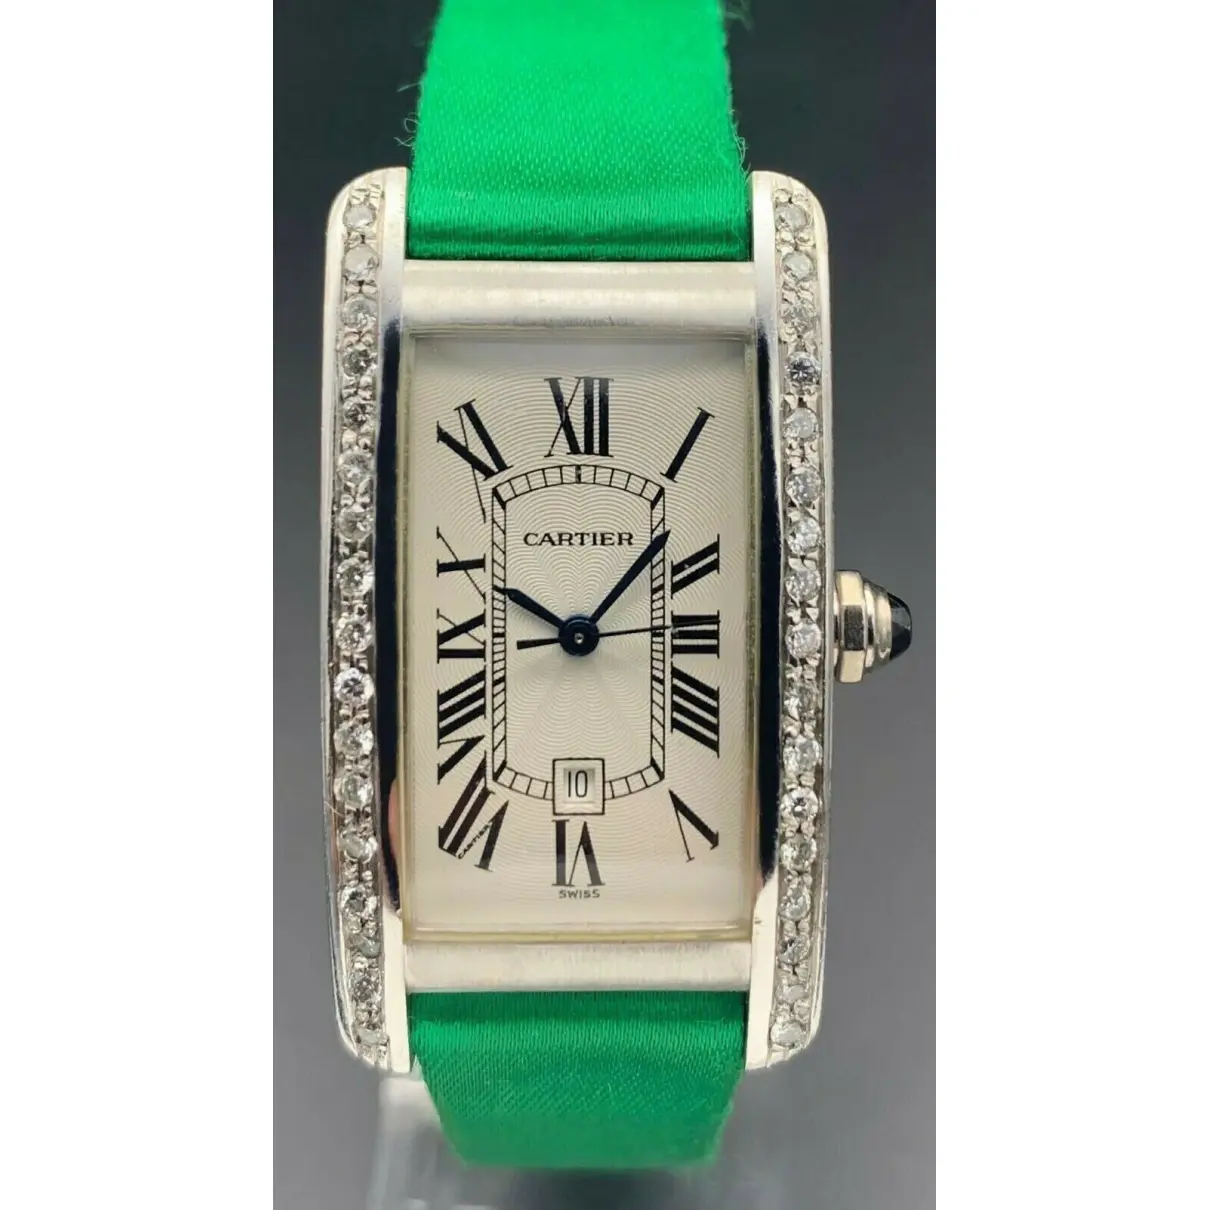 Buy Cartier Tank Américaine white gold watch online